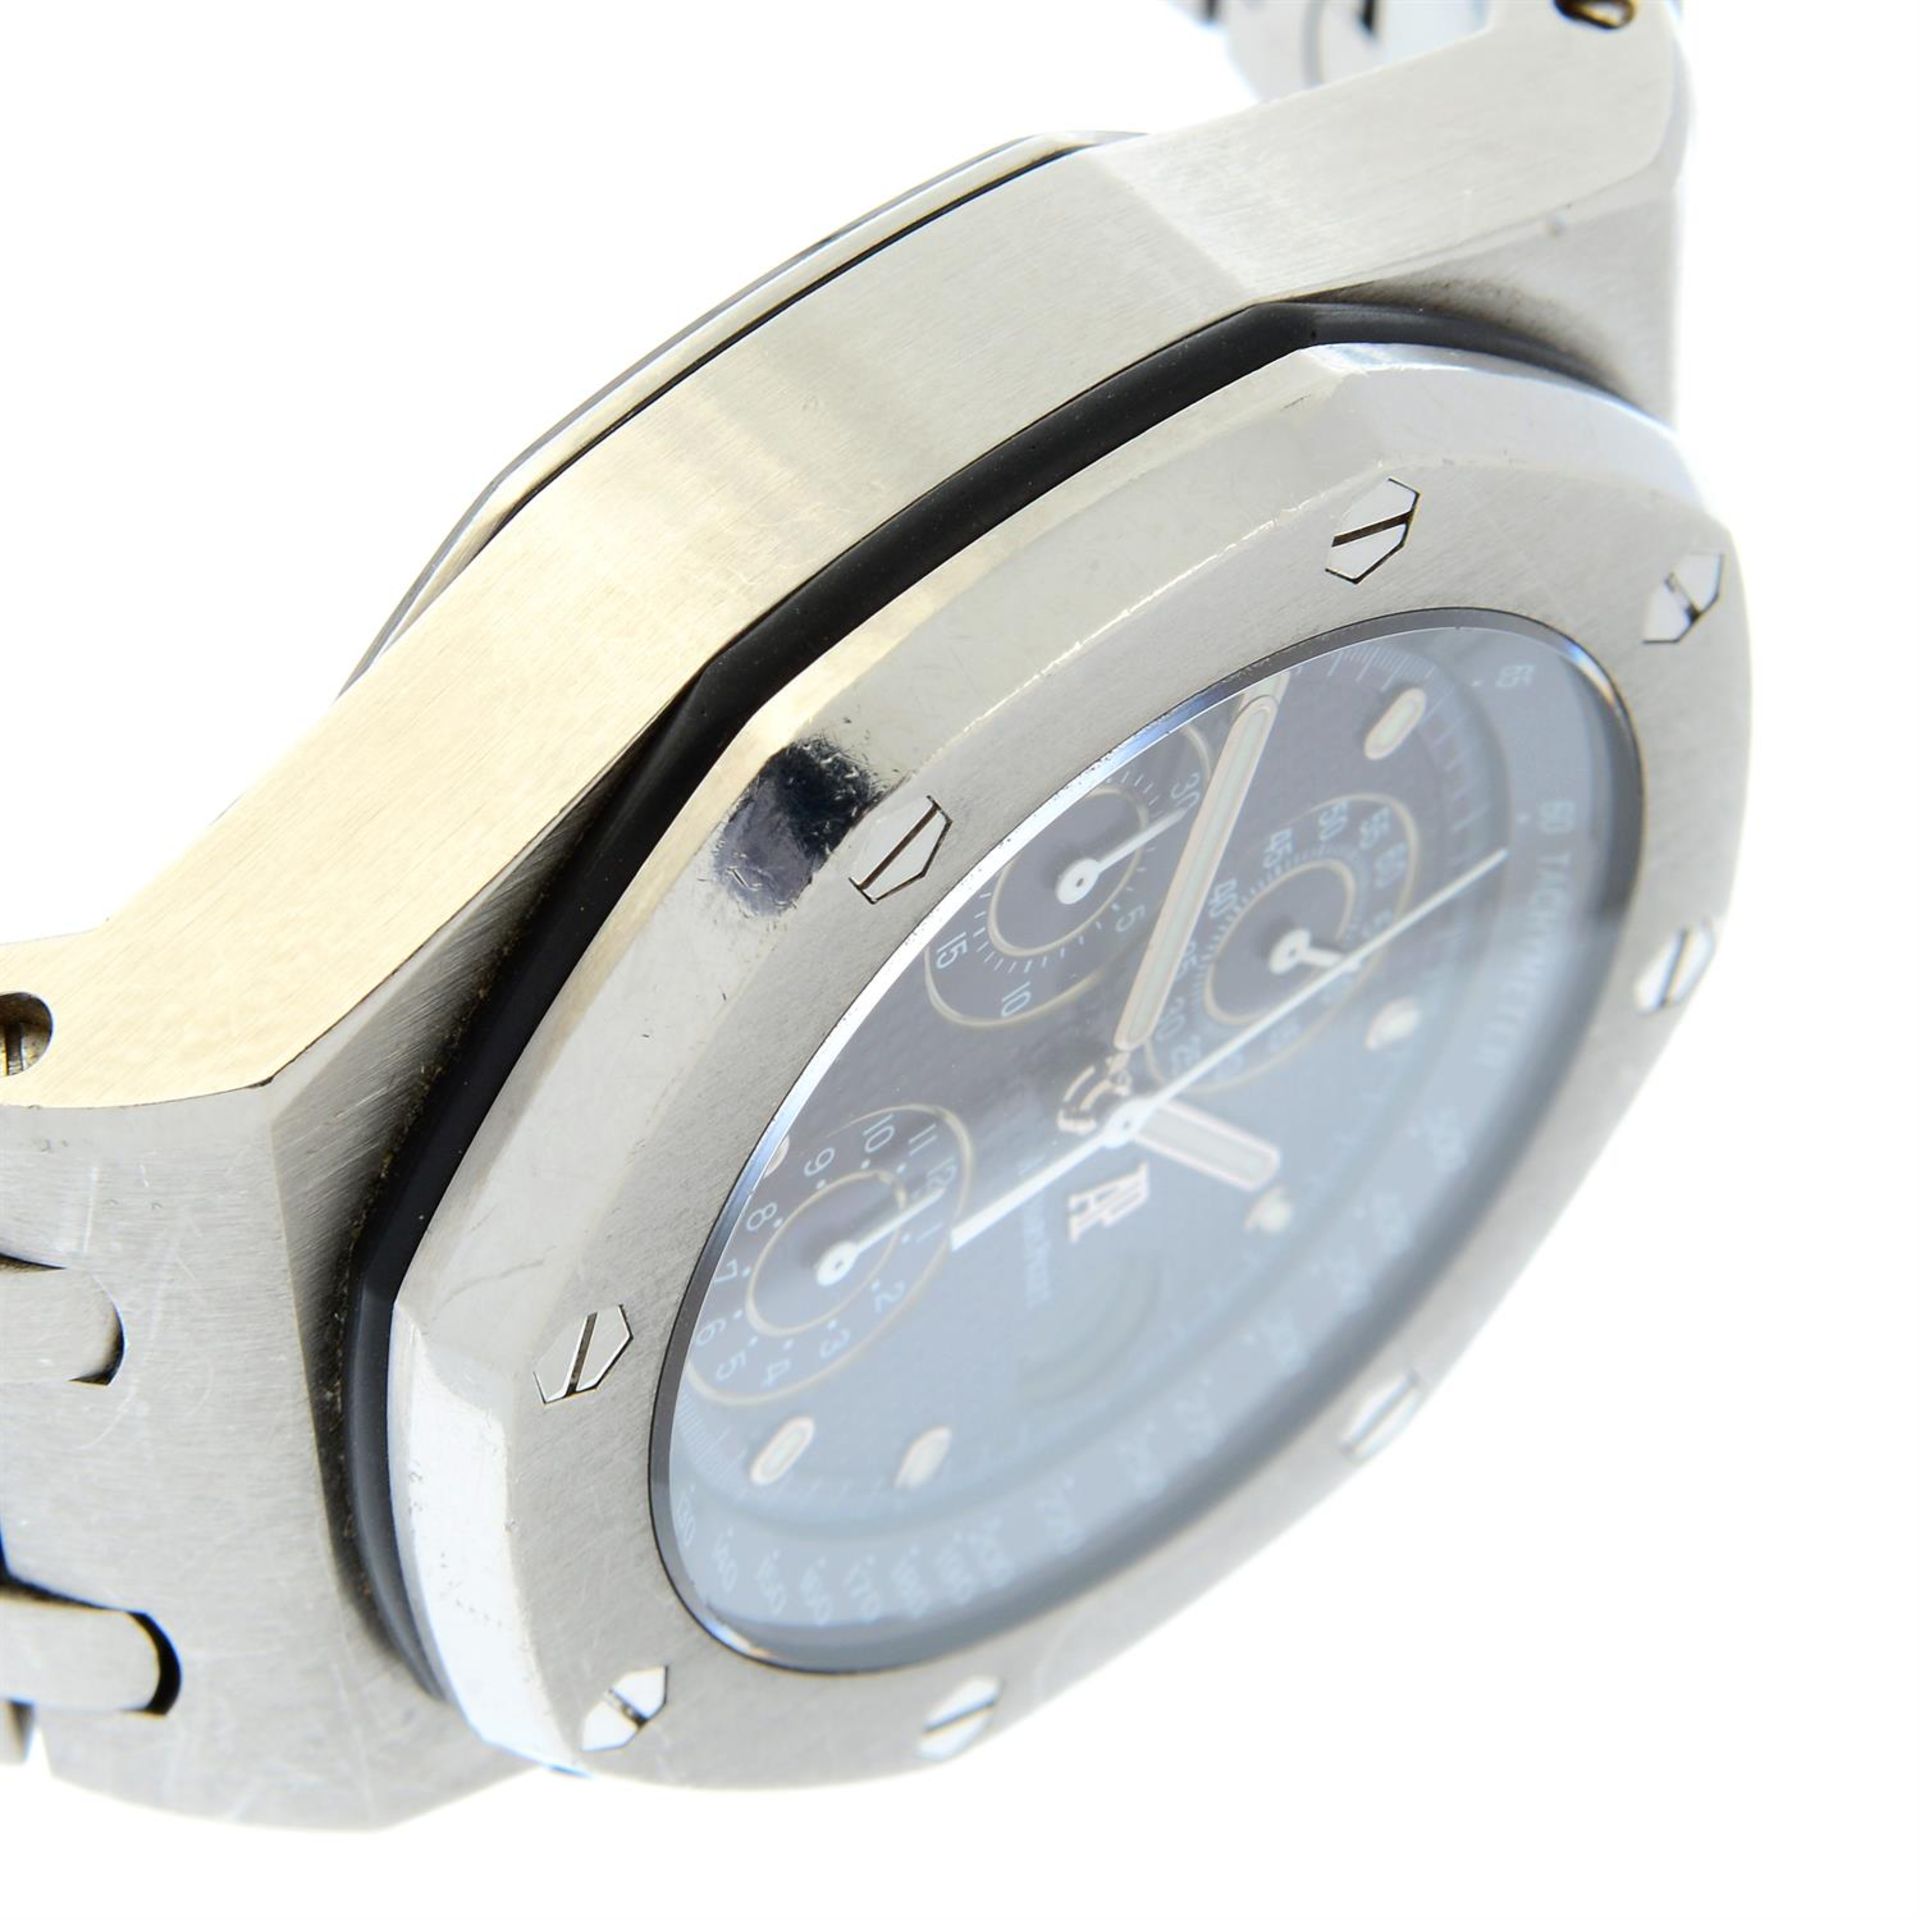 AUDEMARS PIGUET - a stainless steel Royal Oak Offshore chronograph bracelet watch, 42mm. - Image 4 of 6